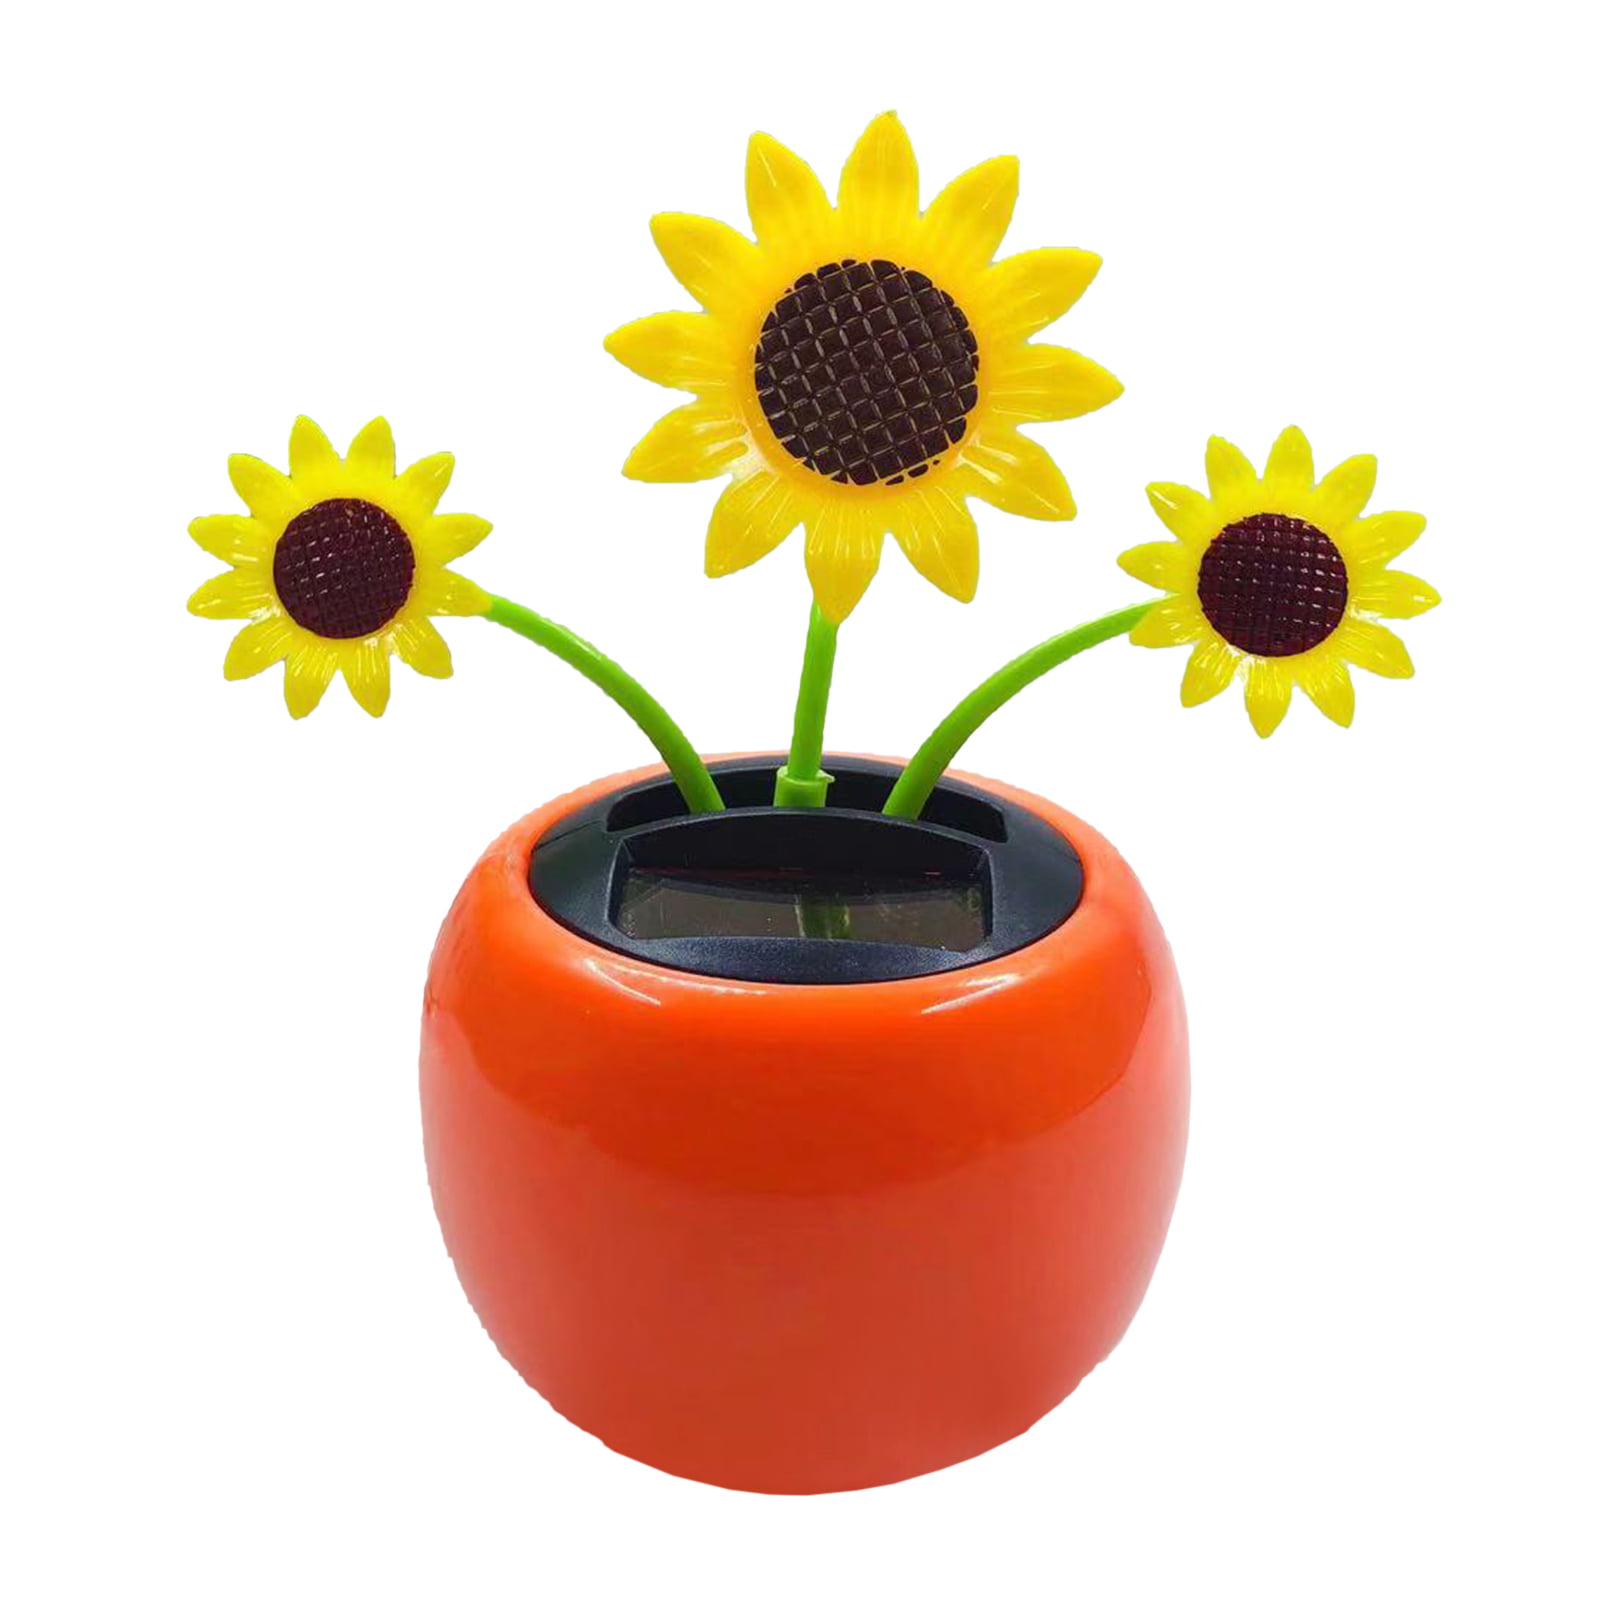 LeadingStar Solar Toy Mini Dancing Flower Sunflower Great as Gift 1PCS 